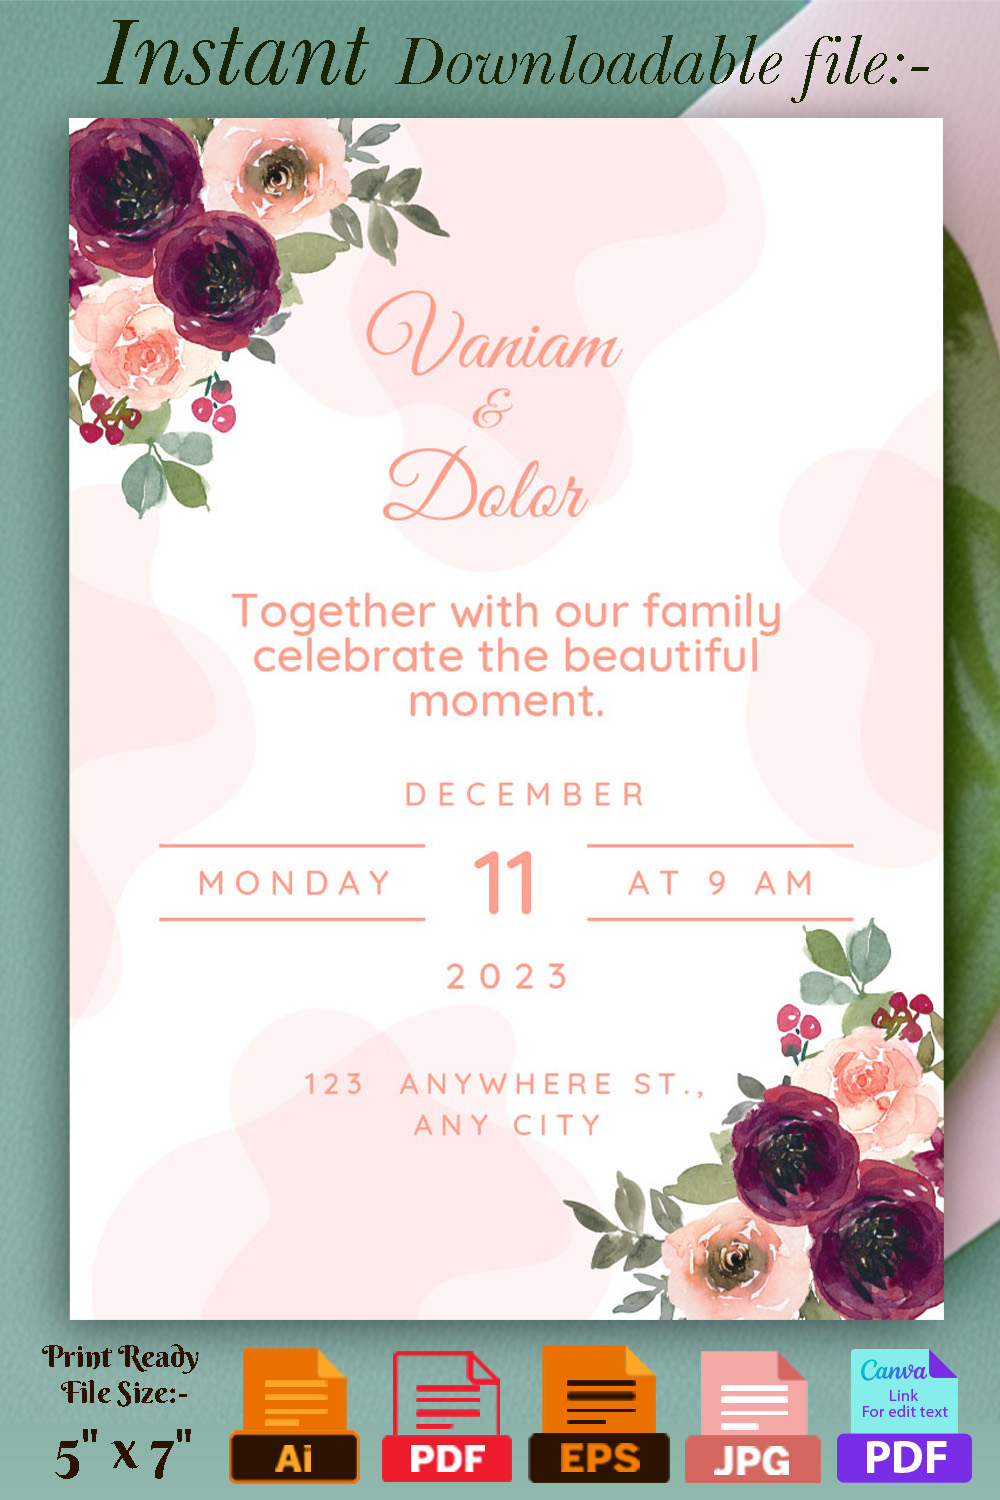 Image of exquisite wedding invitation with floral design.